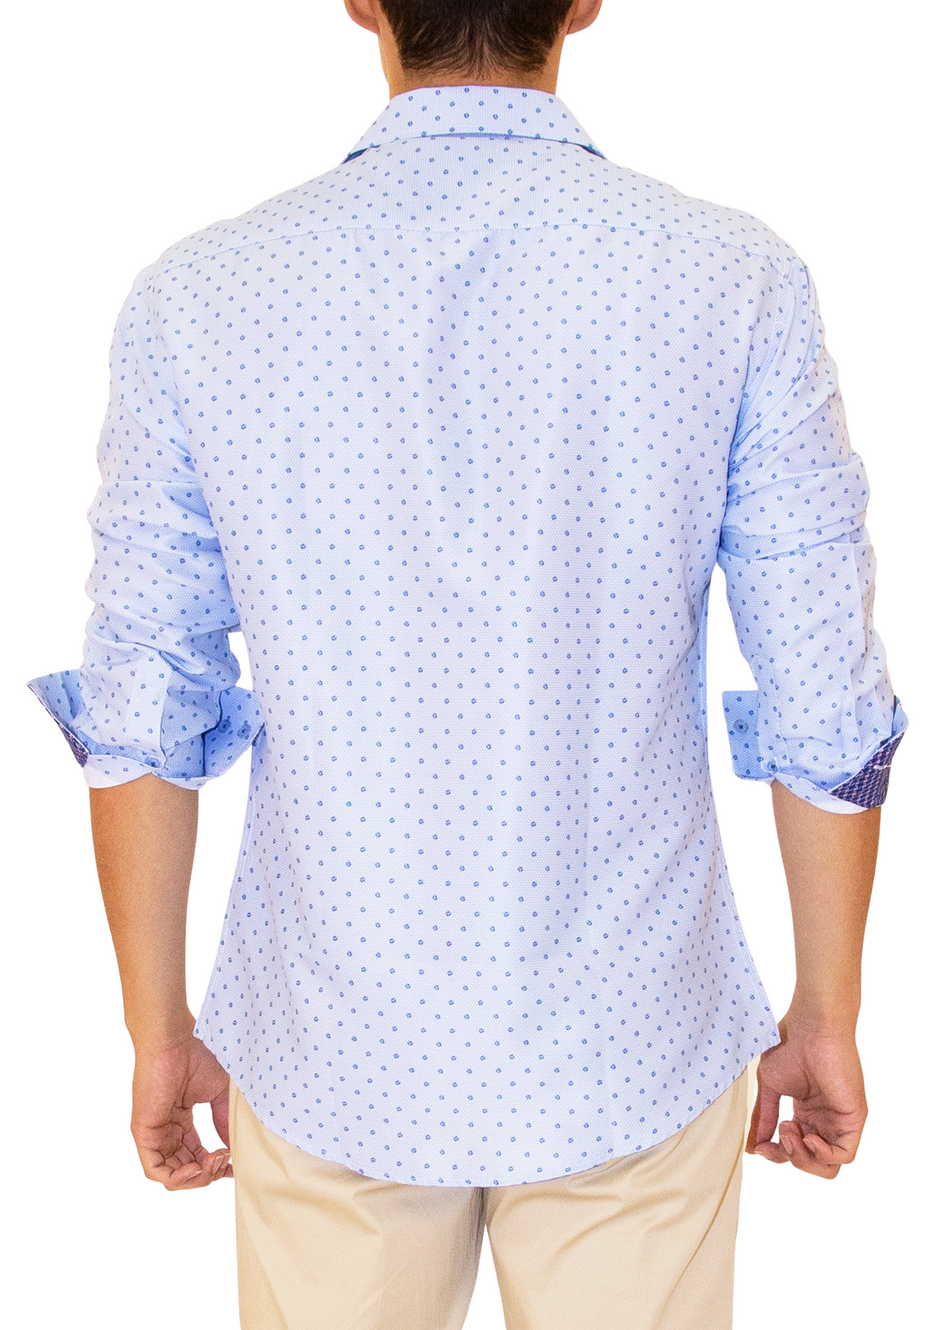 Geometric Leaf Microprint Long Sleeve Dress Shirt Blue